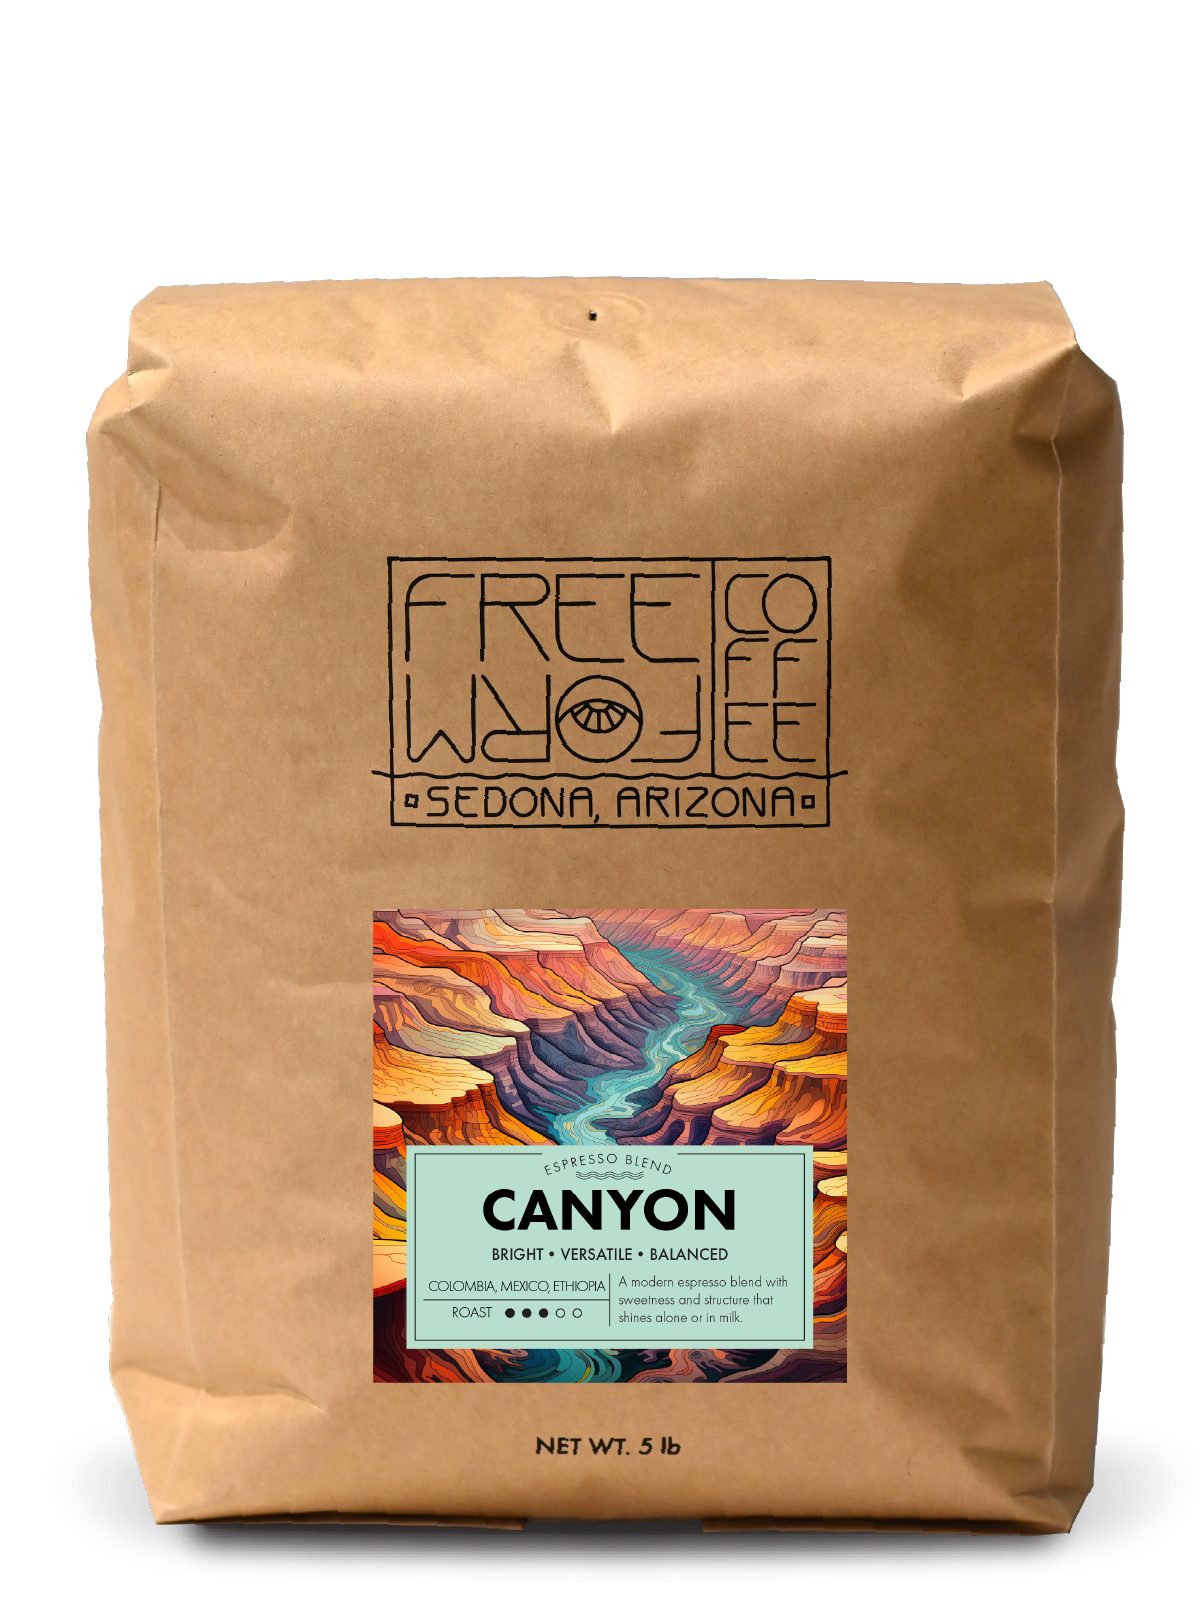 Canyon - Espresso Blend